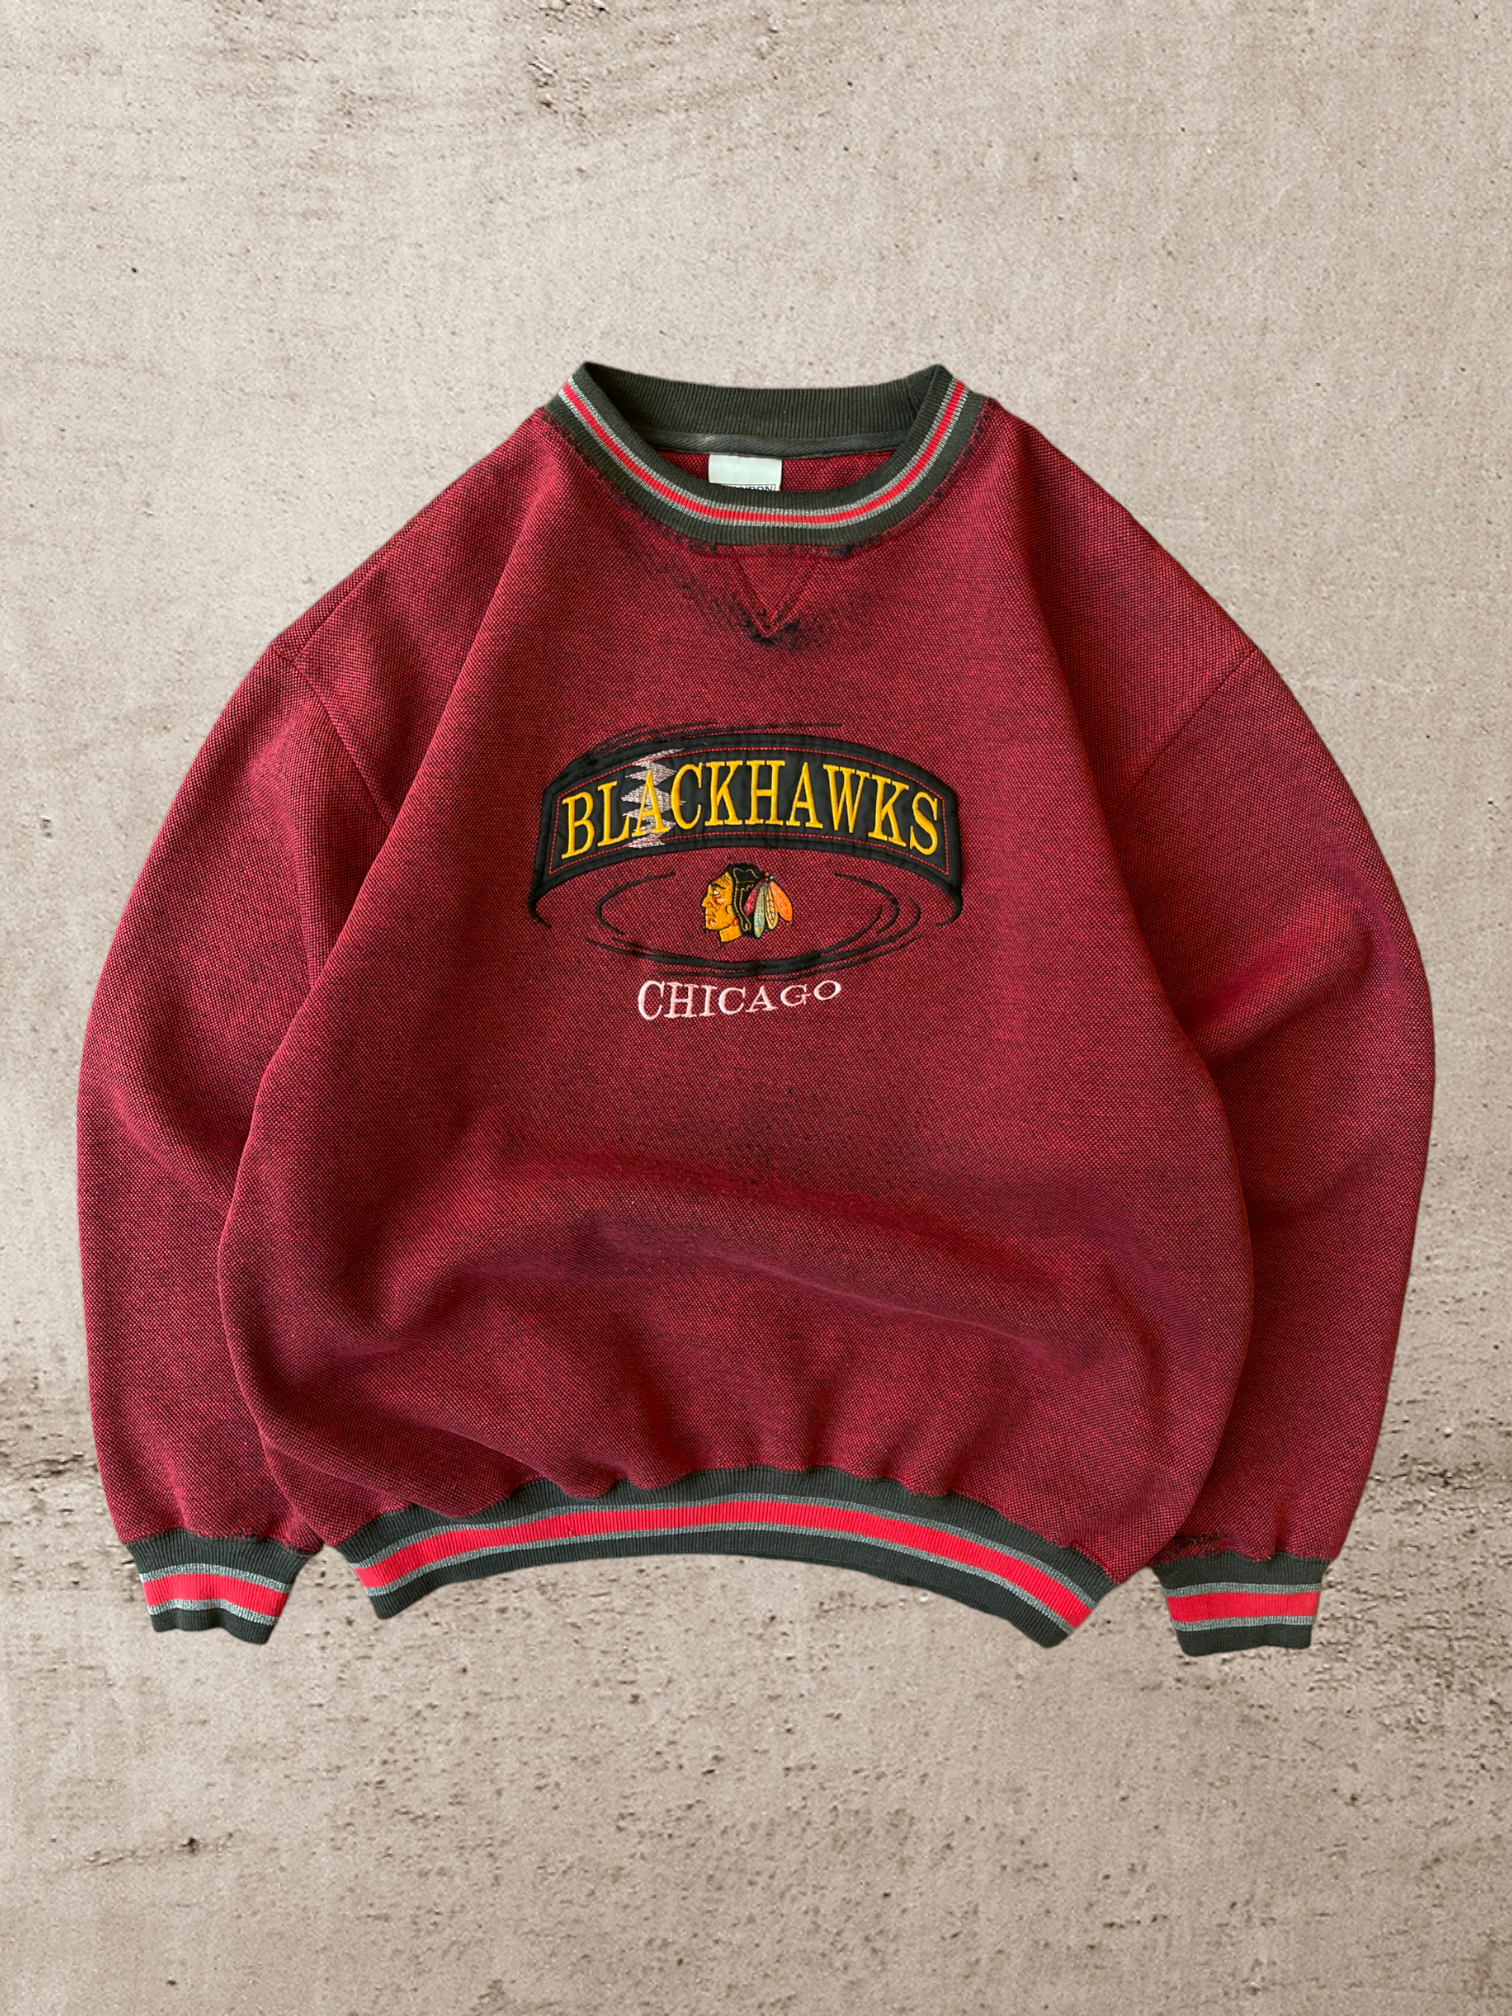 90s Distressed Chicago Blackhawks Crewneck - Large